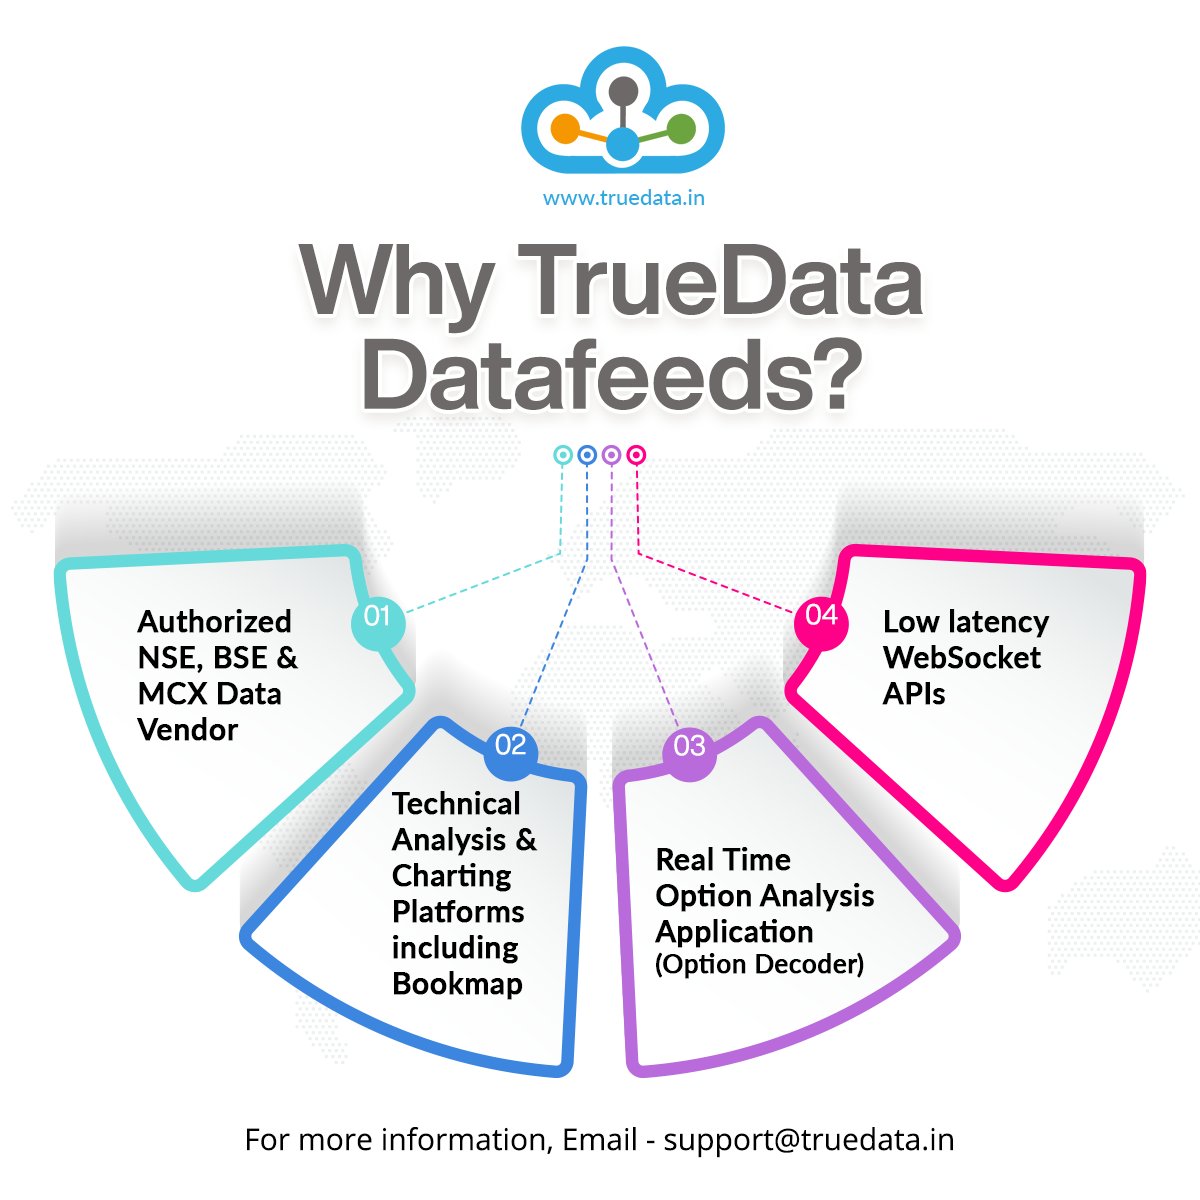 🔥📣 Why TrueData Datafeeds?
💁‍♂️ Authorized NSE, BSE & MCX Data Vendor
💁‍♂️ Low latency WebSocket APIs
truedata.in
#TrueData #optiondecoder #velocity #AnalysisSoftware #stockmarket #trader #investing #realtimedata #nsedata #mcxdata #authorizeddatavendor